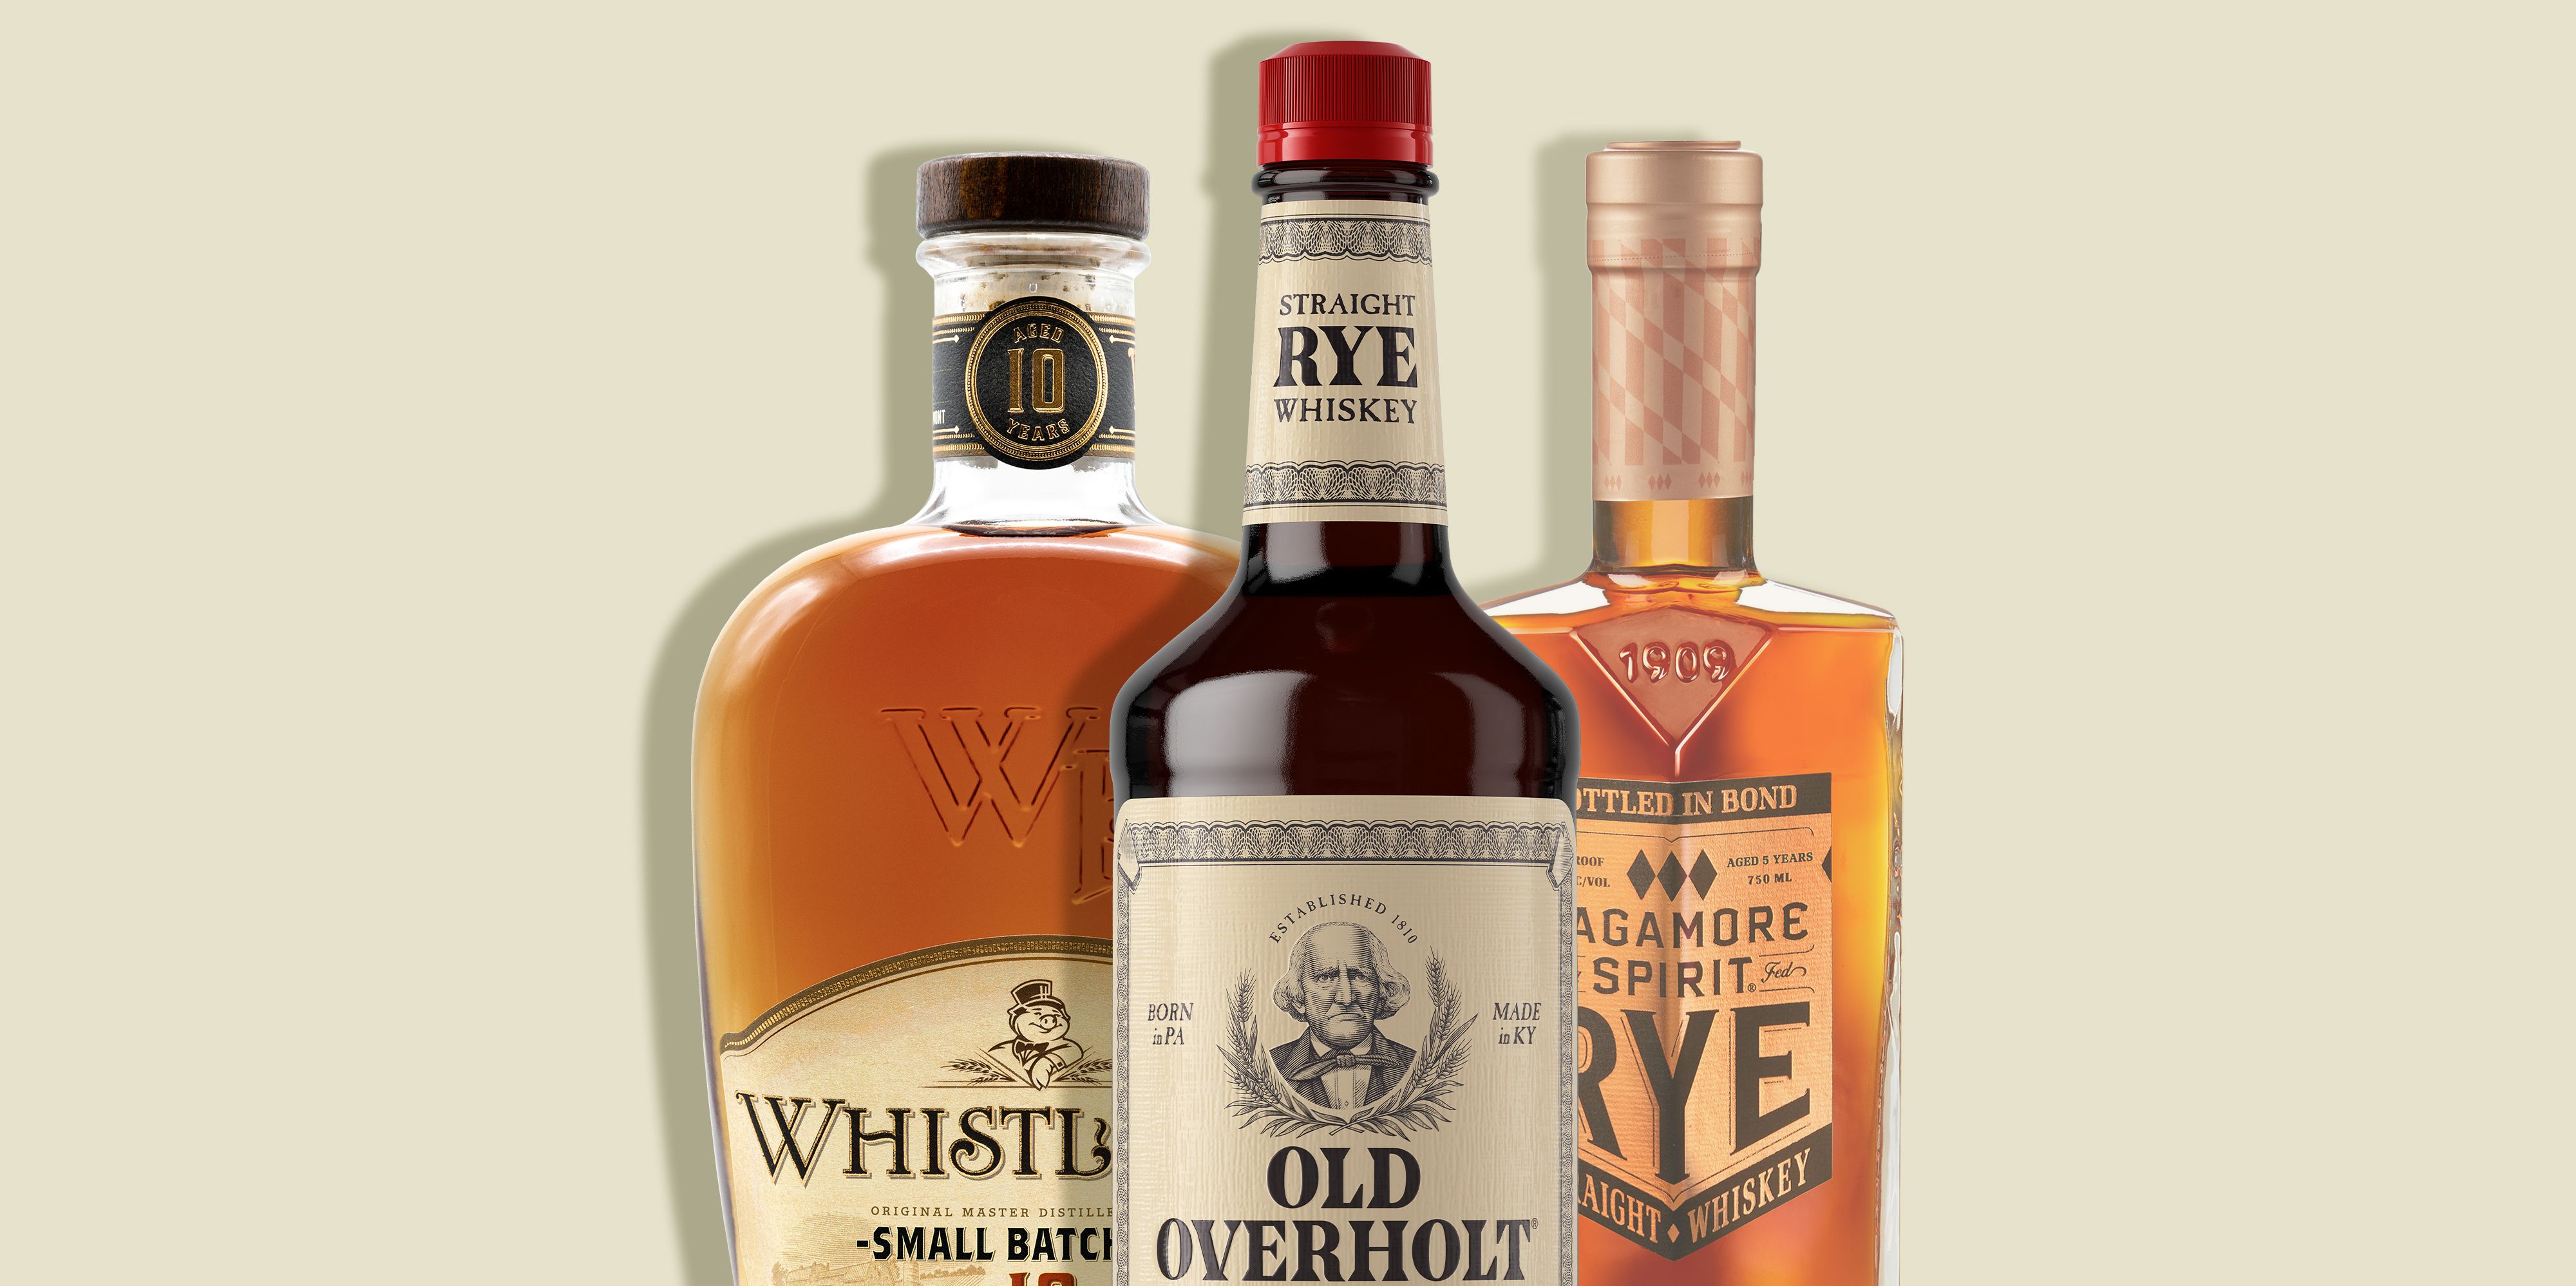 10 Best Rye Whiskey Brands to Drink 2022 - Top Rye Bottles to Buy